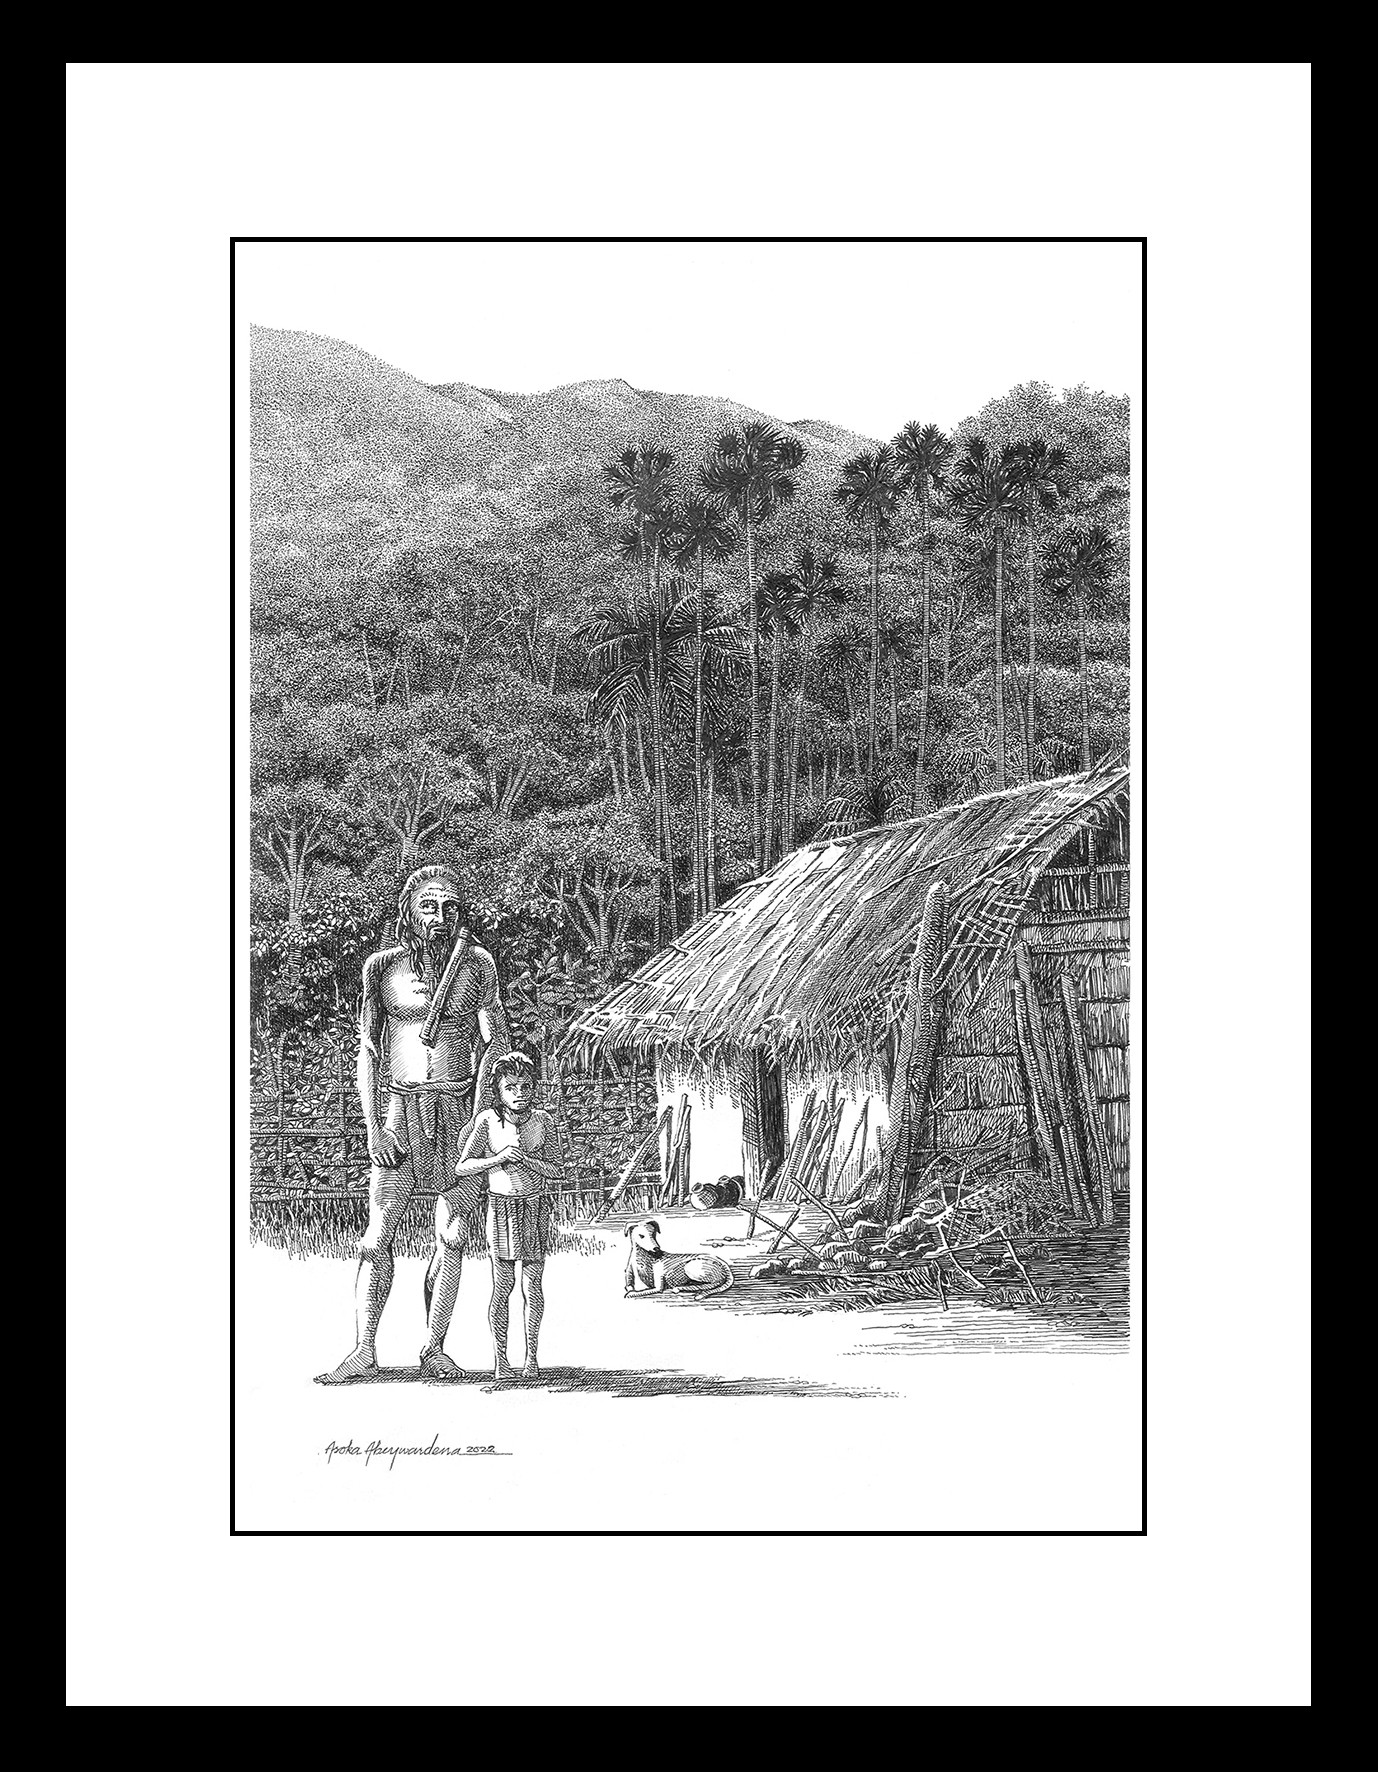 Indigenous man and son by ASOKA ABEYWARDENA